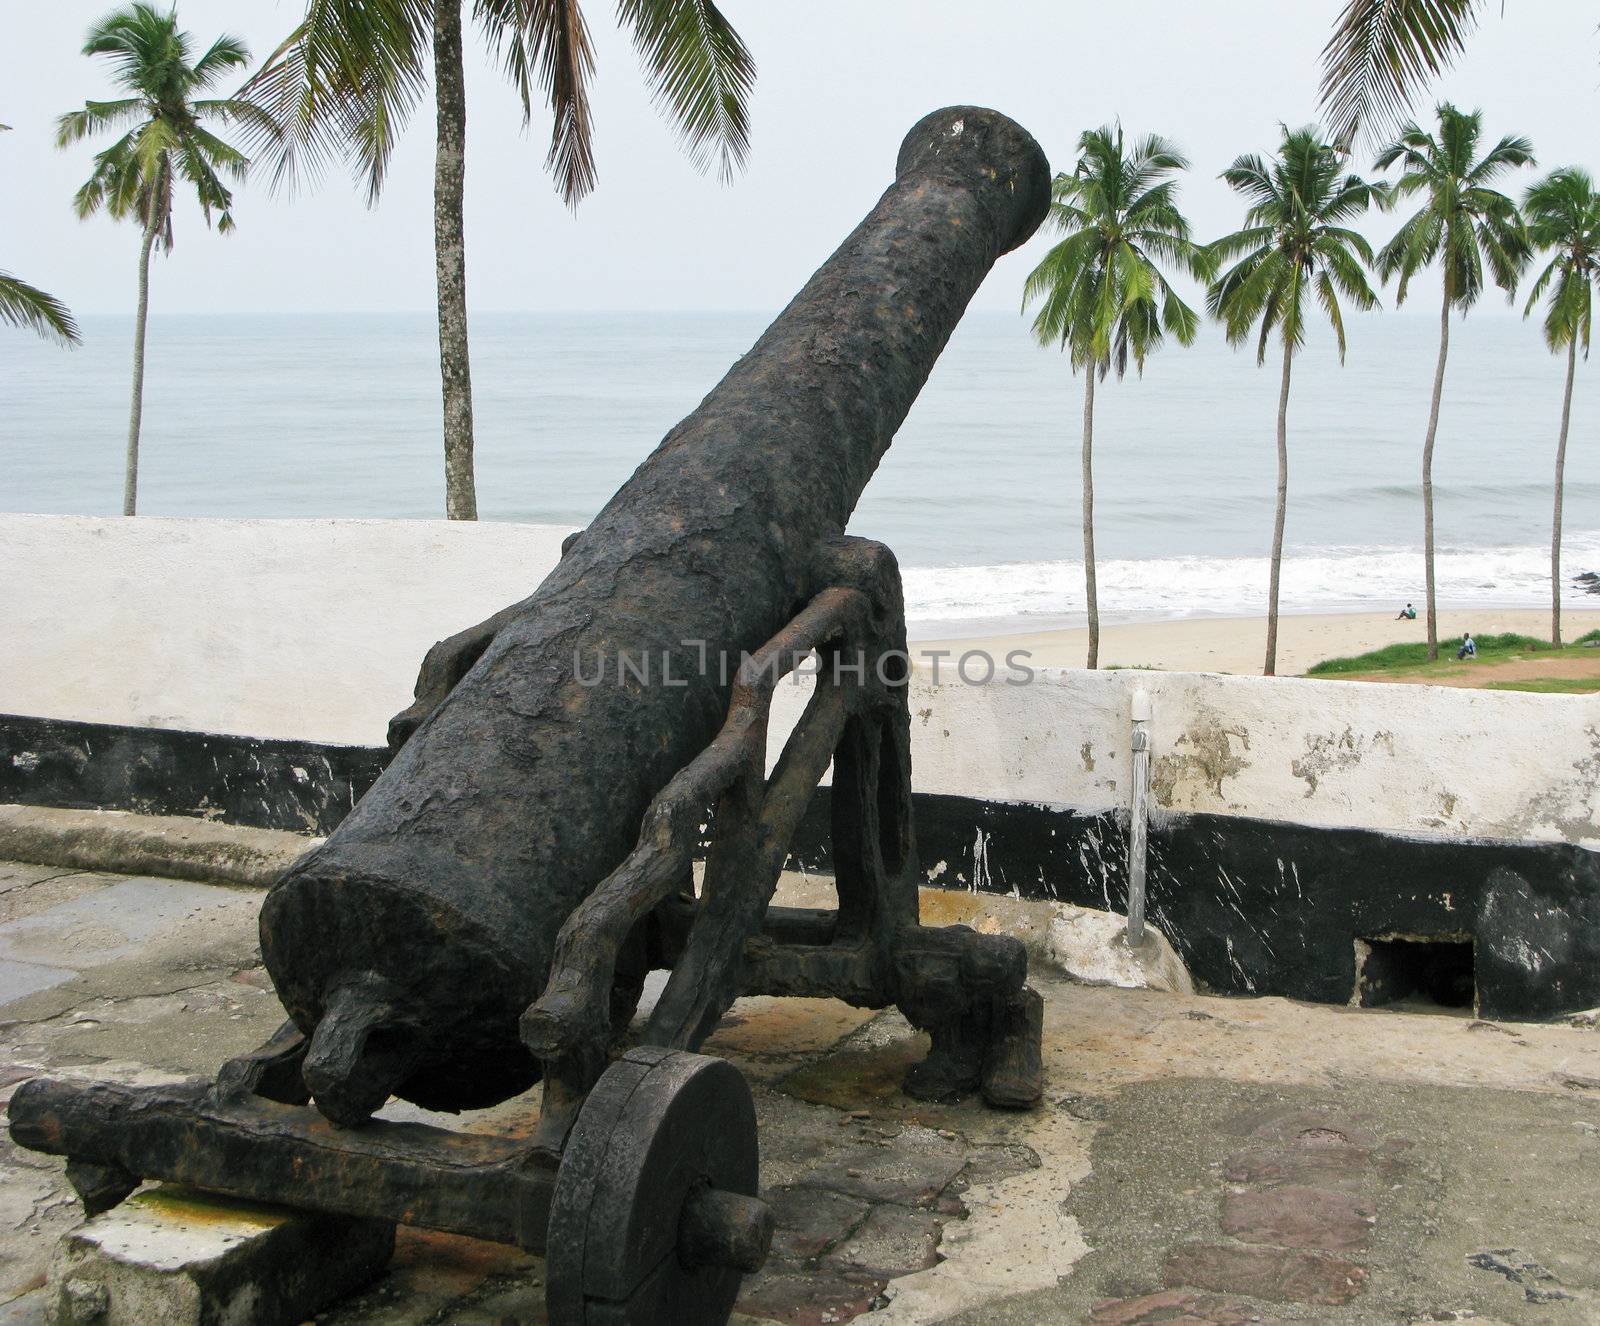 Rusty cannon on Elmina Fort in Ghana by steheap